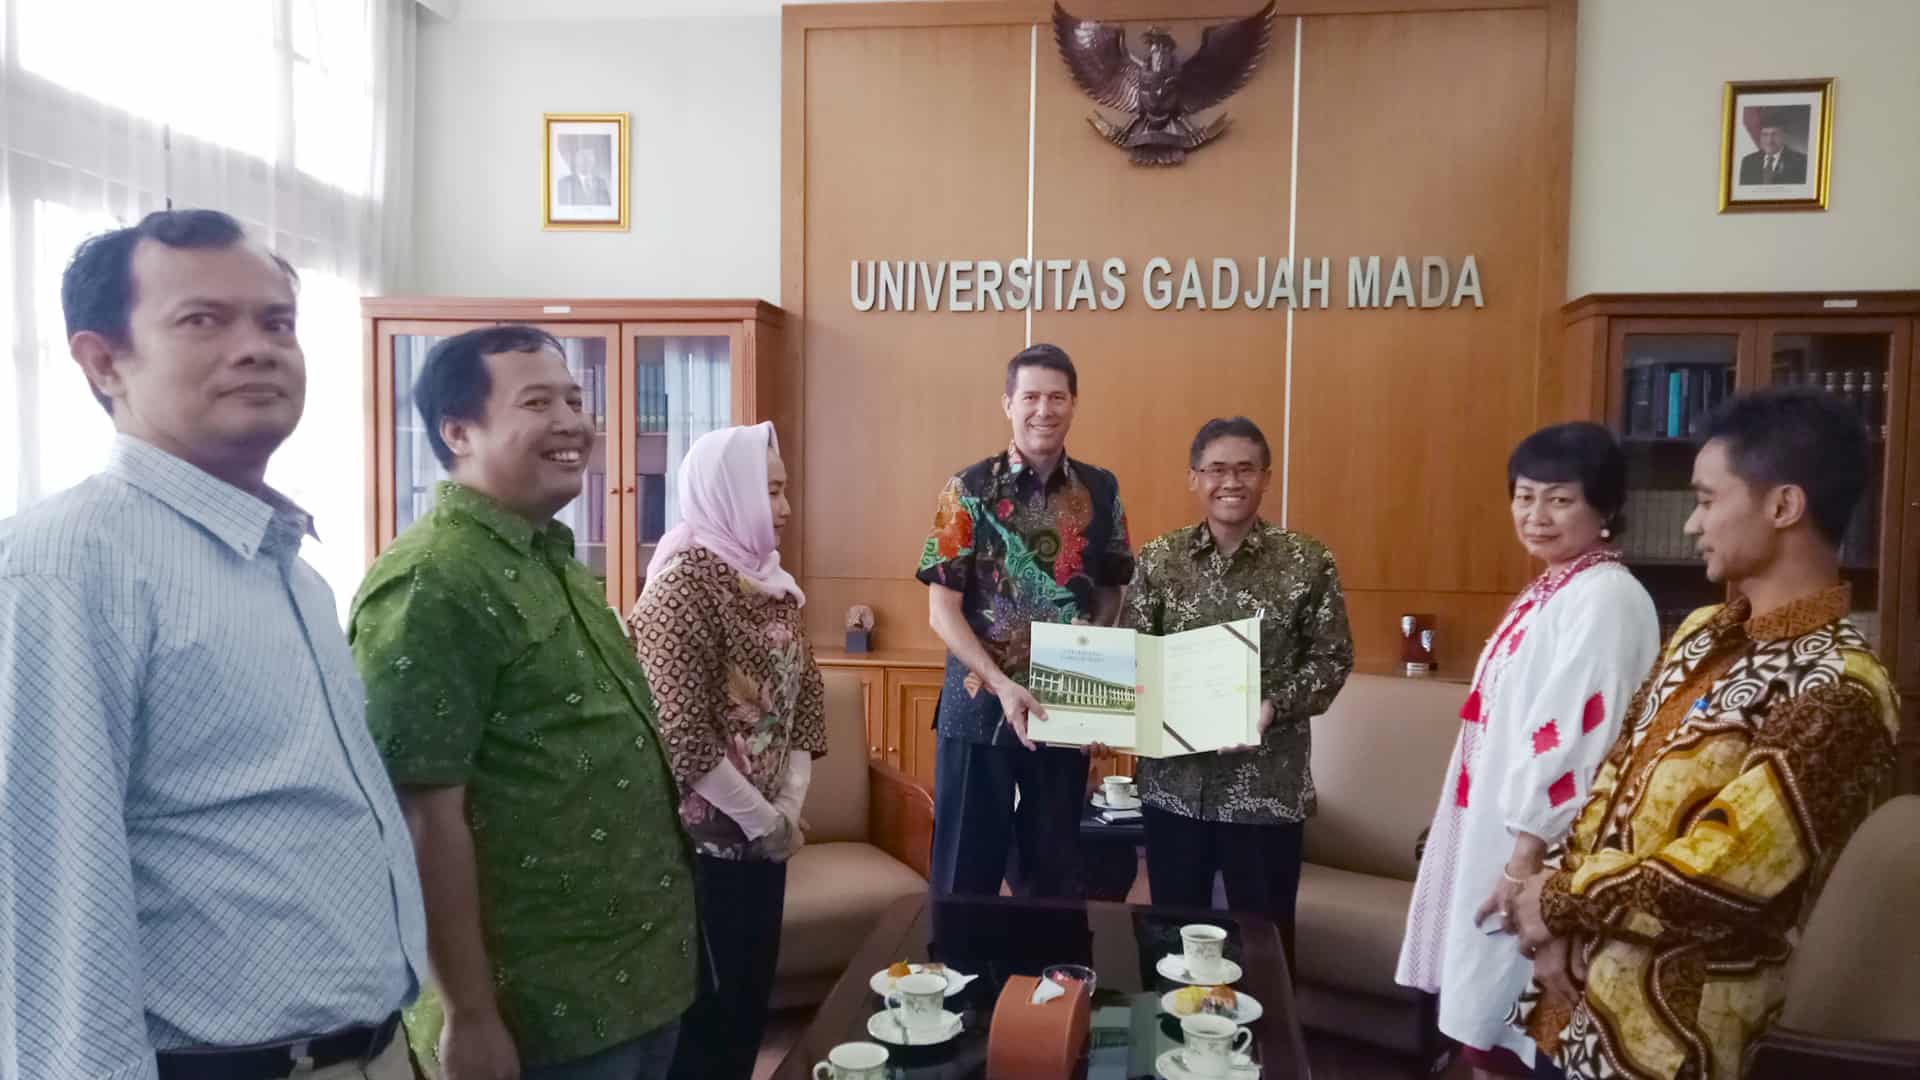 Indonesia’s Universitas Gadjah Mada and PDC partner on national capacity development